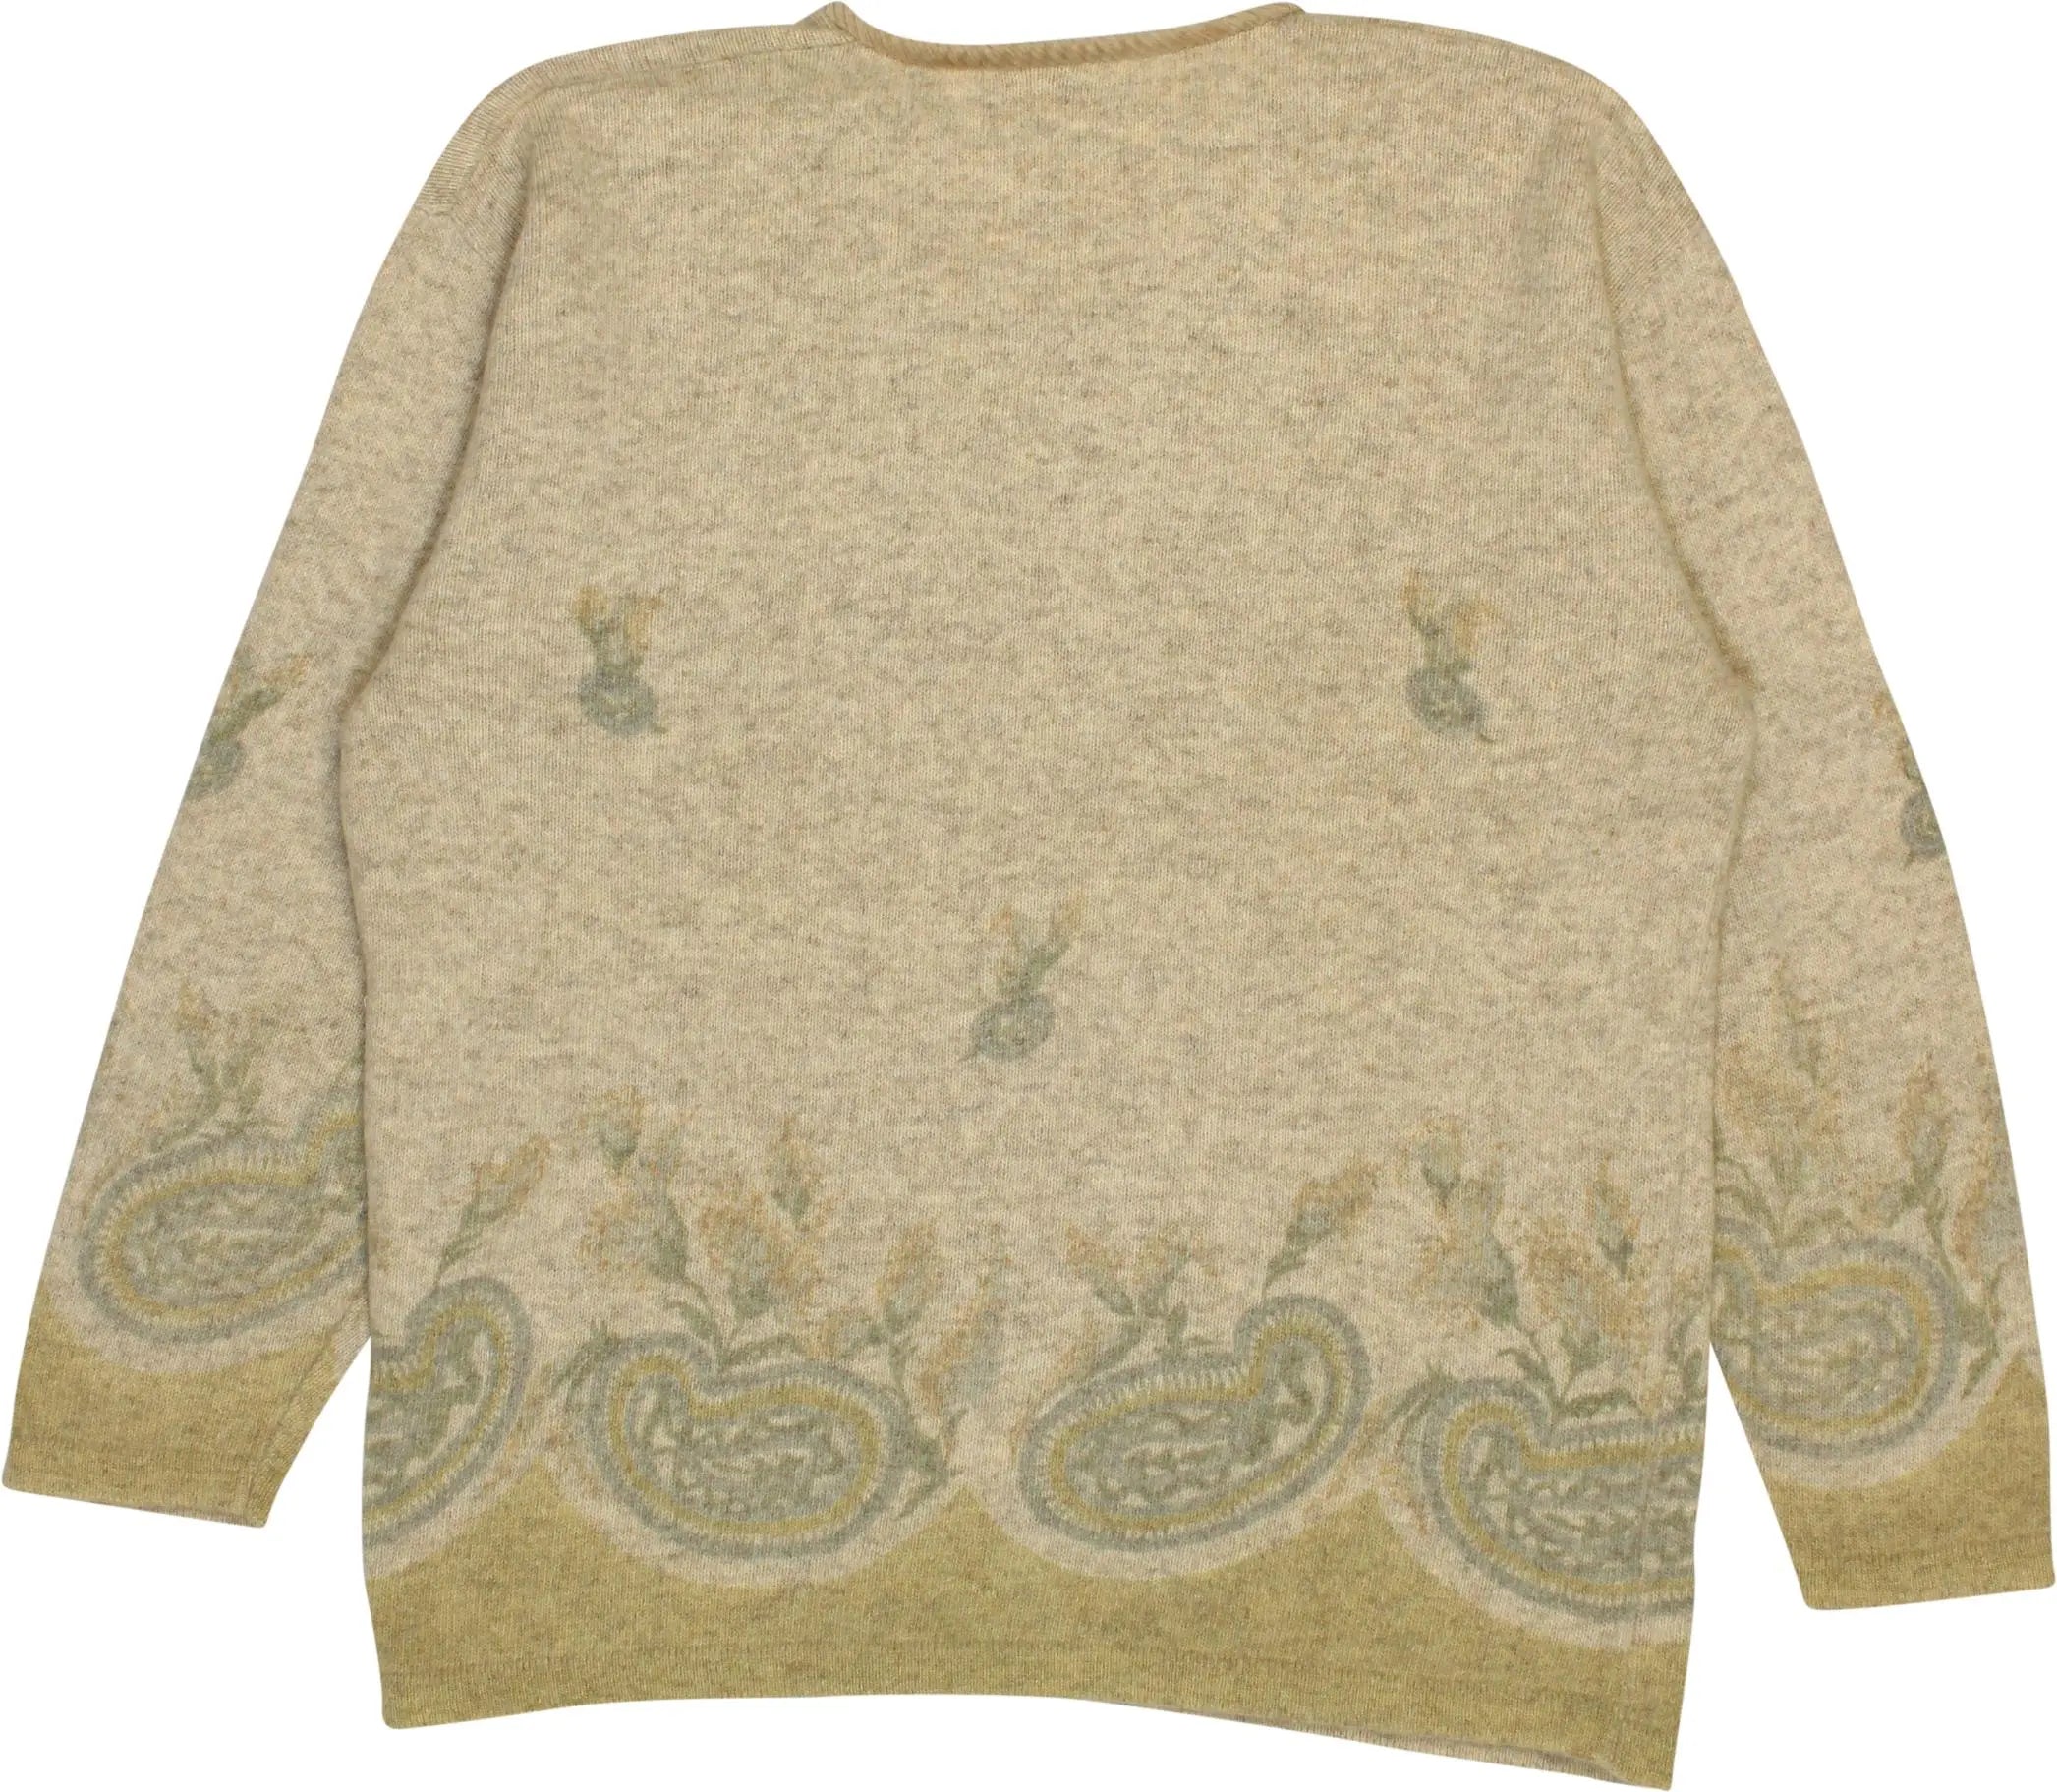 Pennyblack - Beige Wool Blend Jumper- ThriftTale.com - Vintage and second handclothing